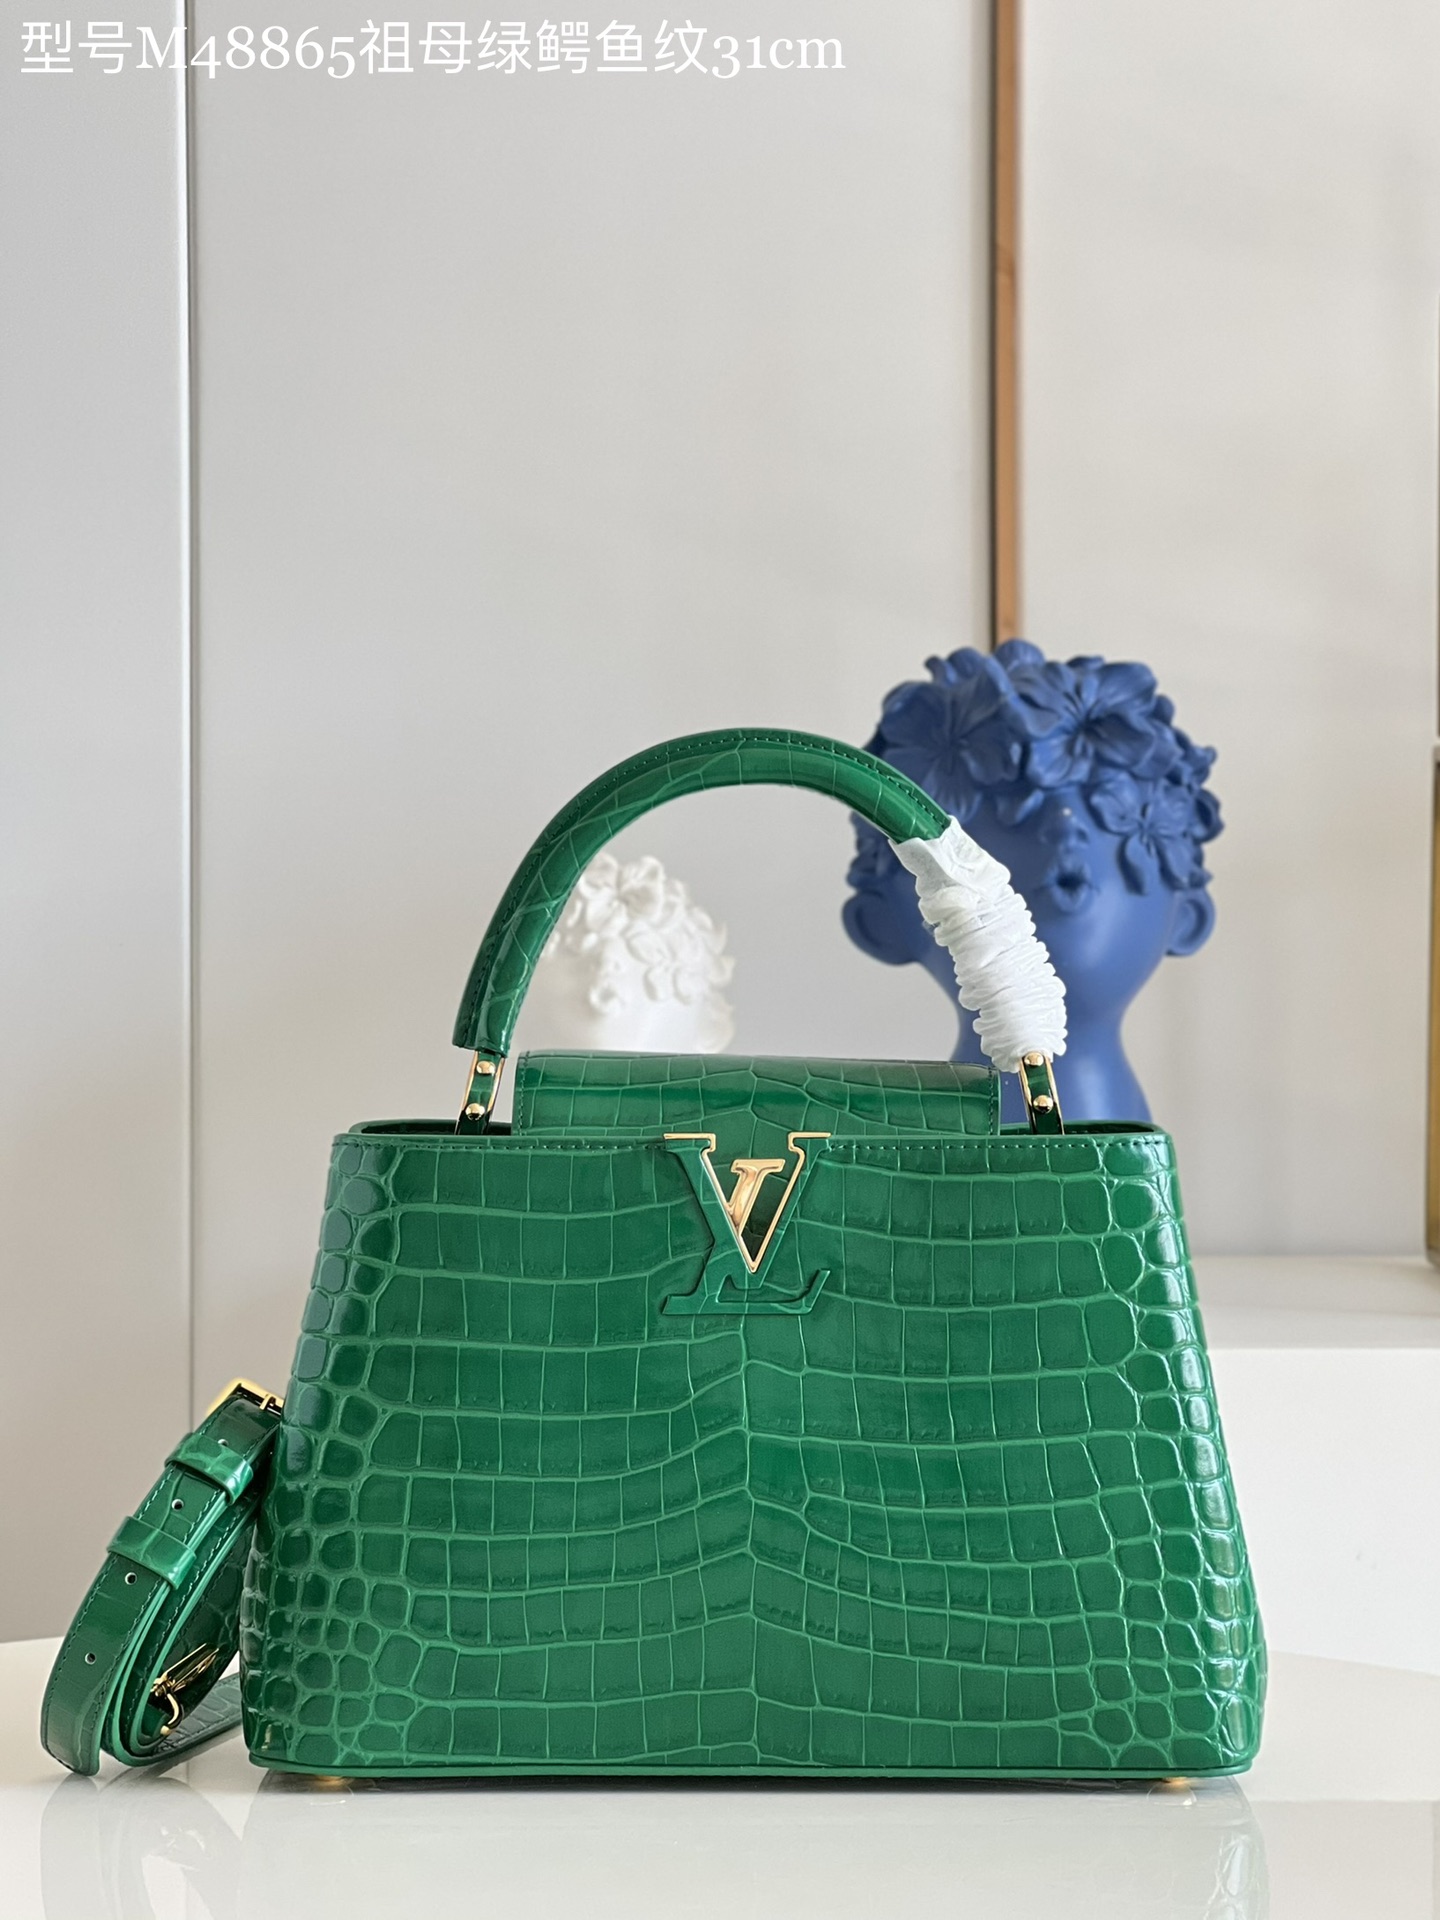 Louis Vuitton LV Capucines Bags Handbags Green Crocodile Leather Goat Skin Sheepskin M48865